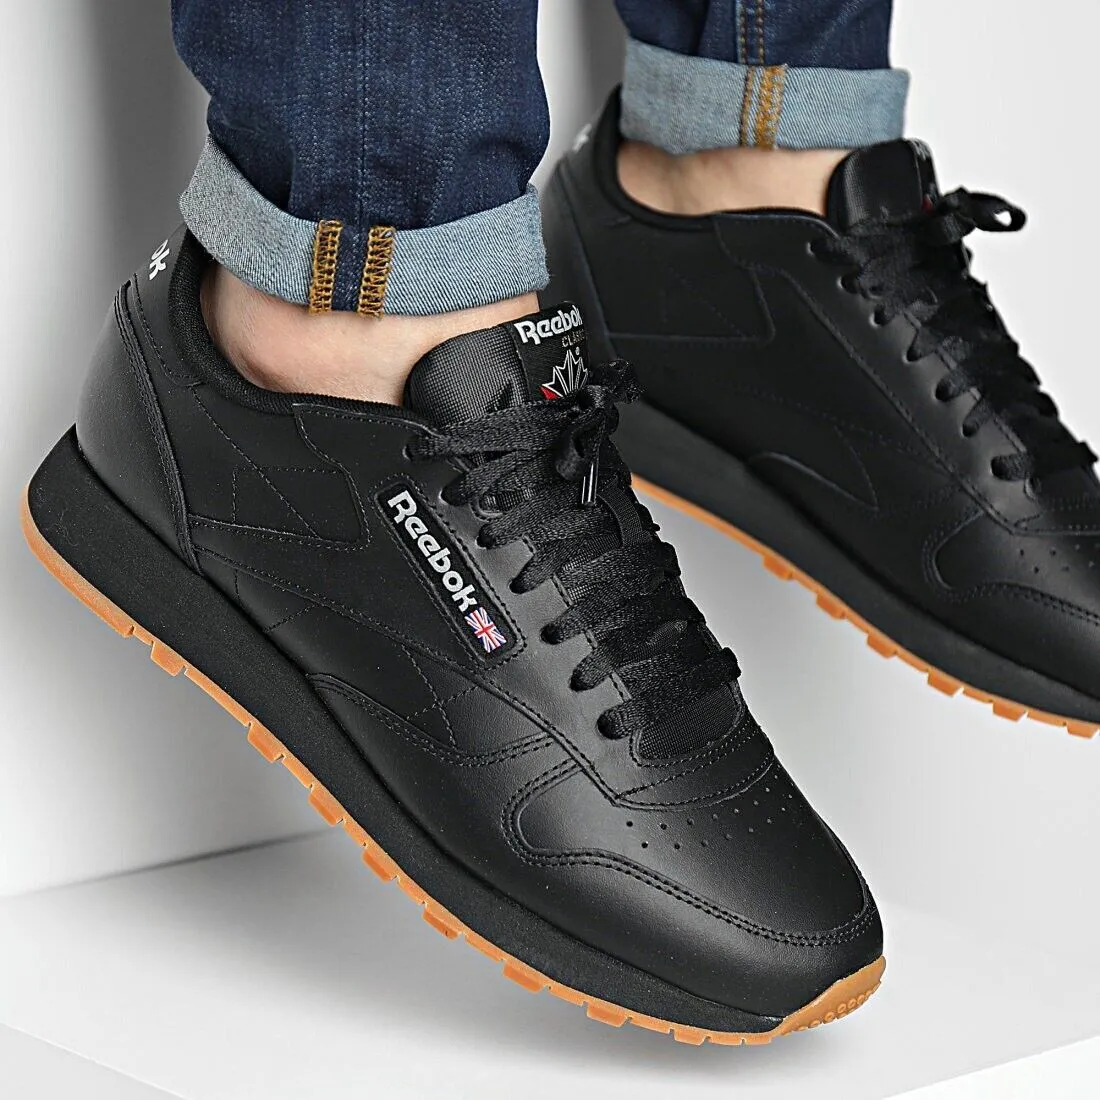 Reebok Leather Black Gum GY0954 Sneakers Sizes - 13 | eBay